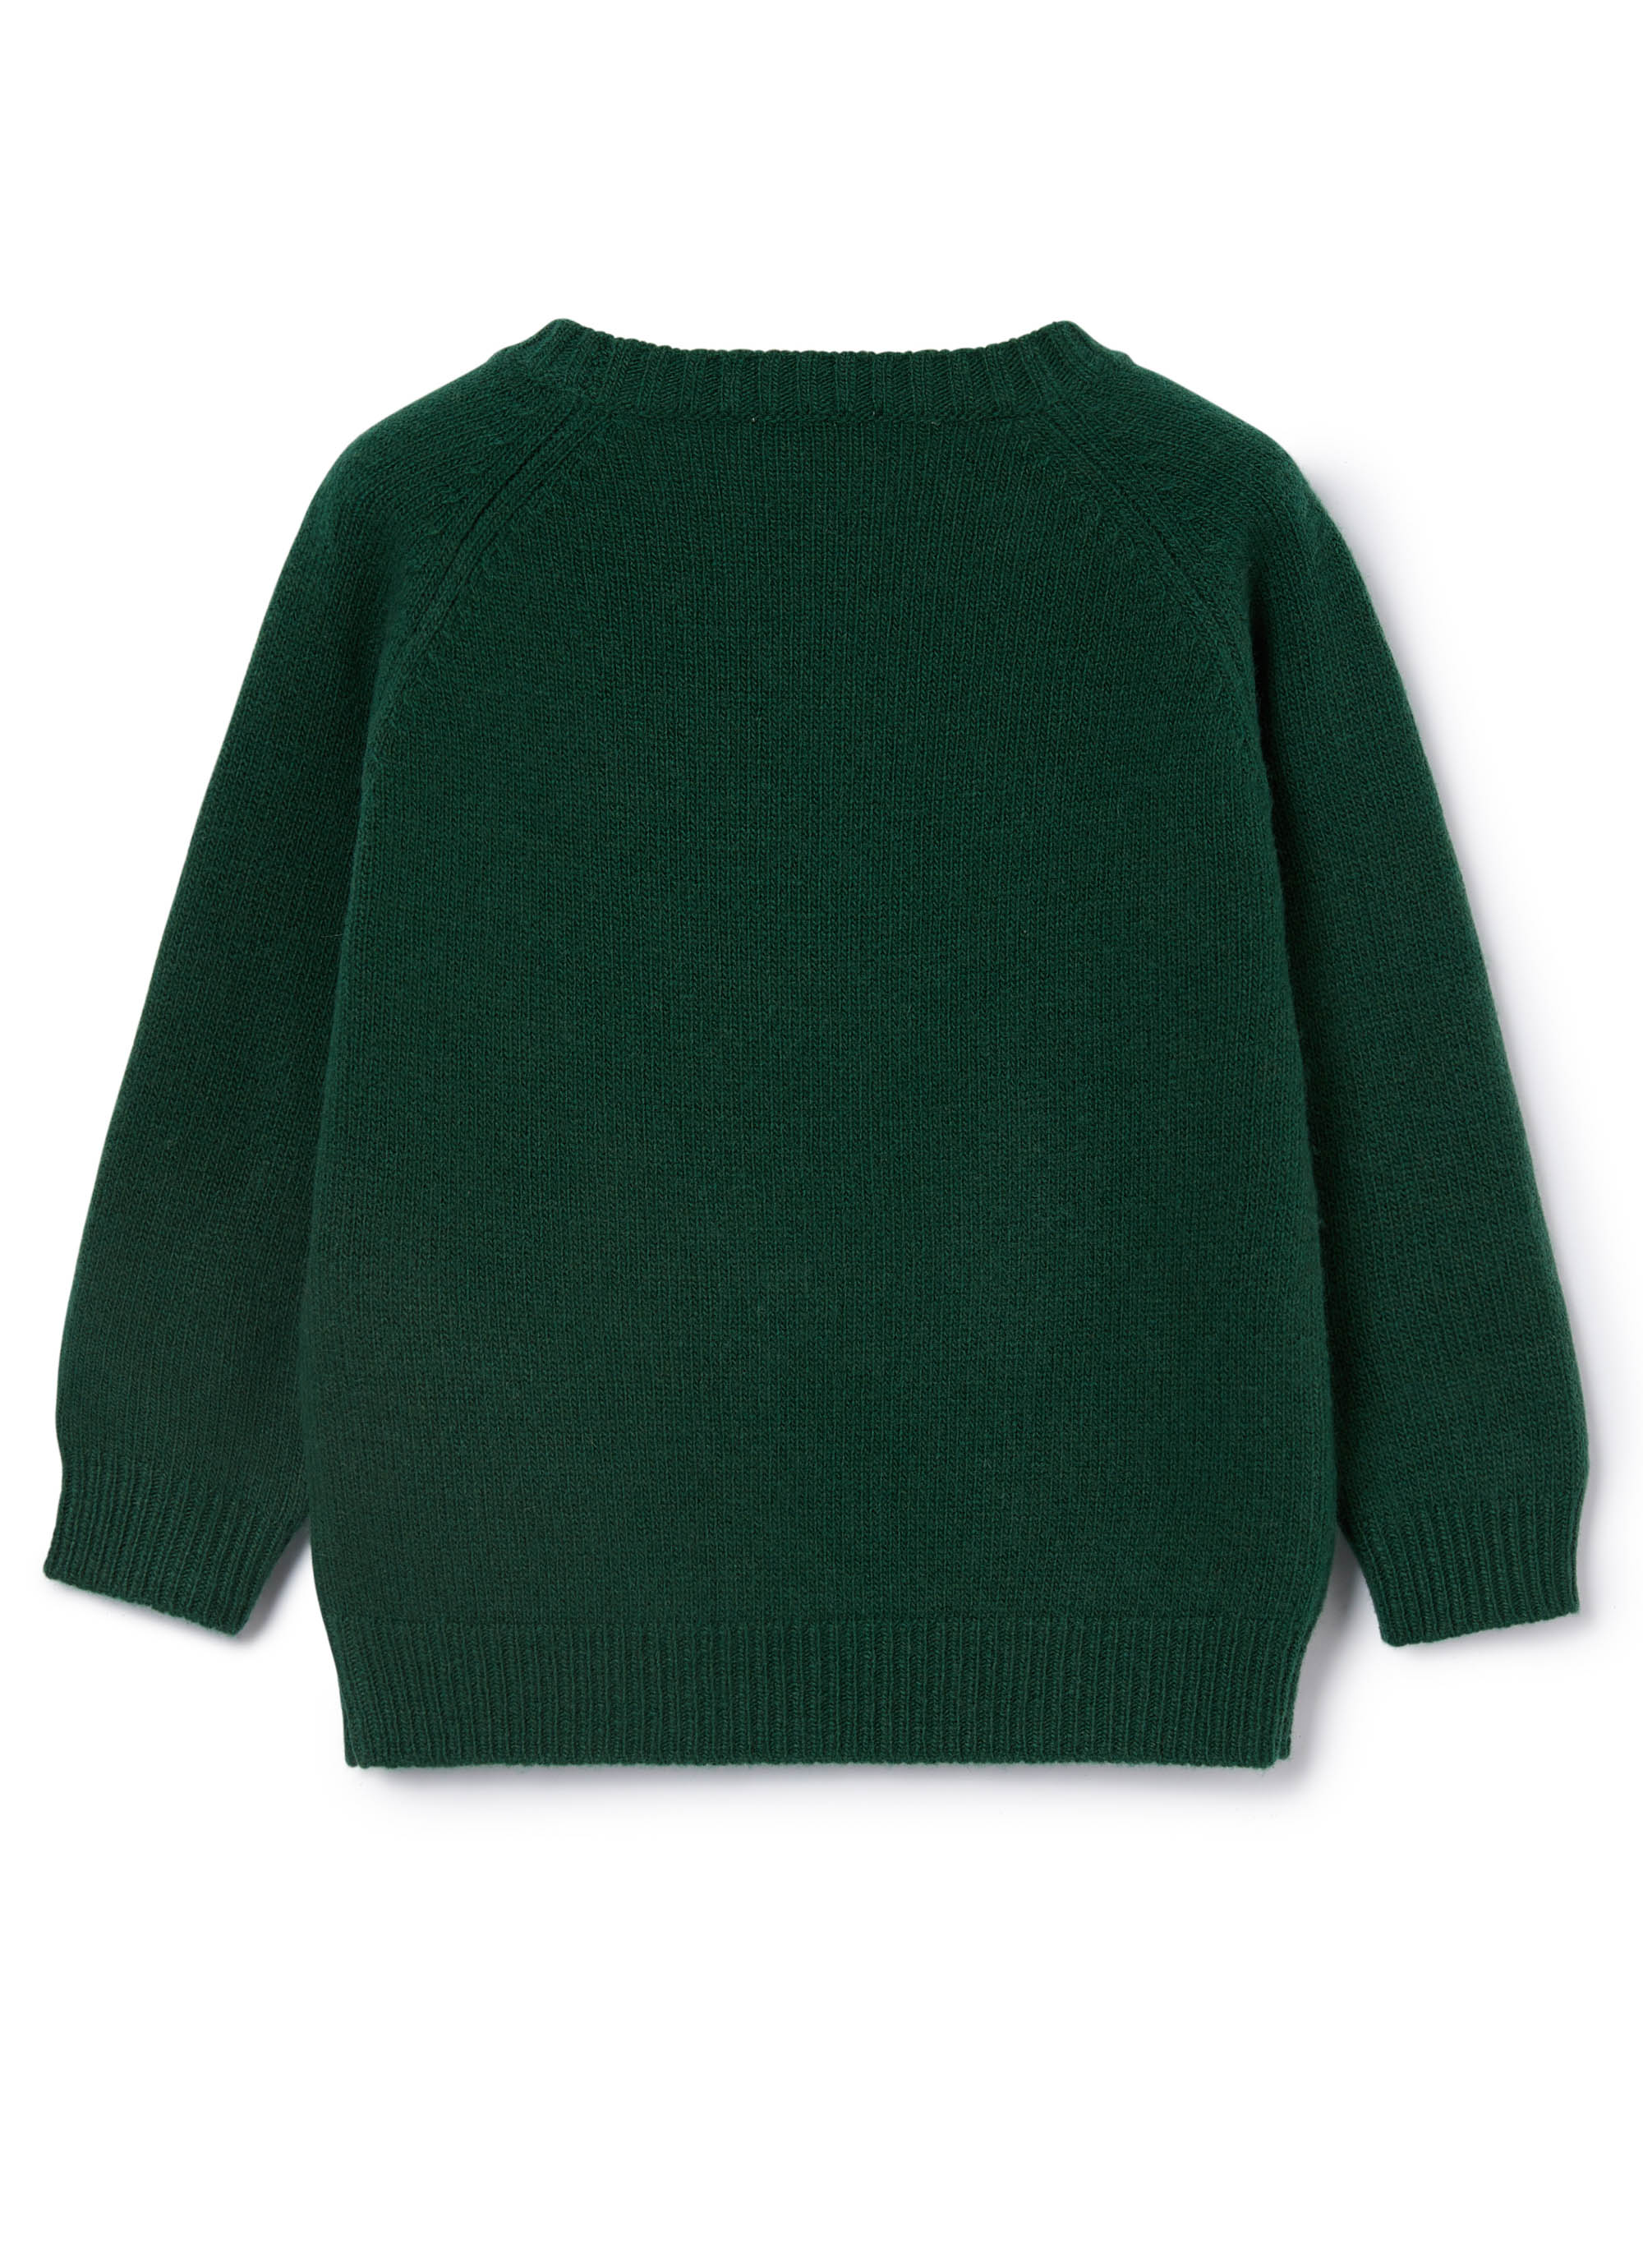 Boys Billiard Green Virgin Wool Sweater